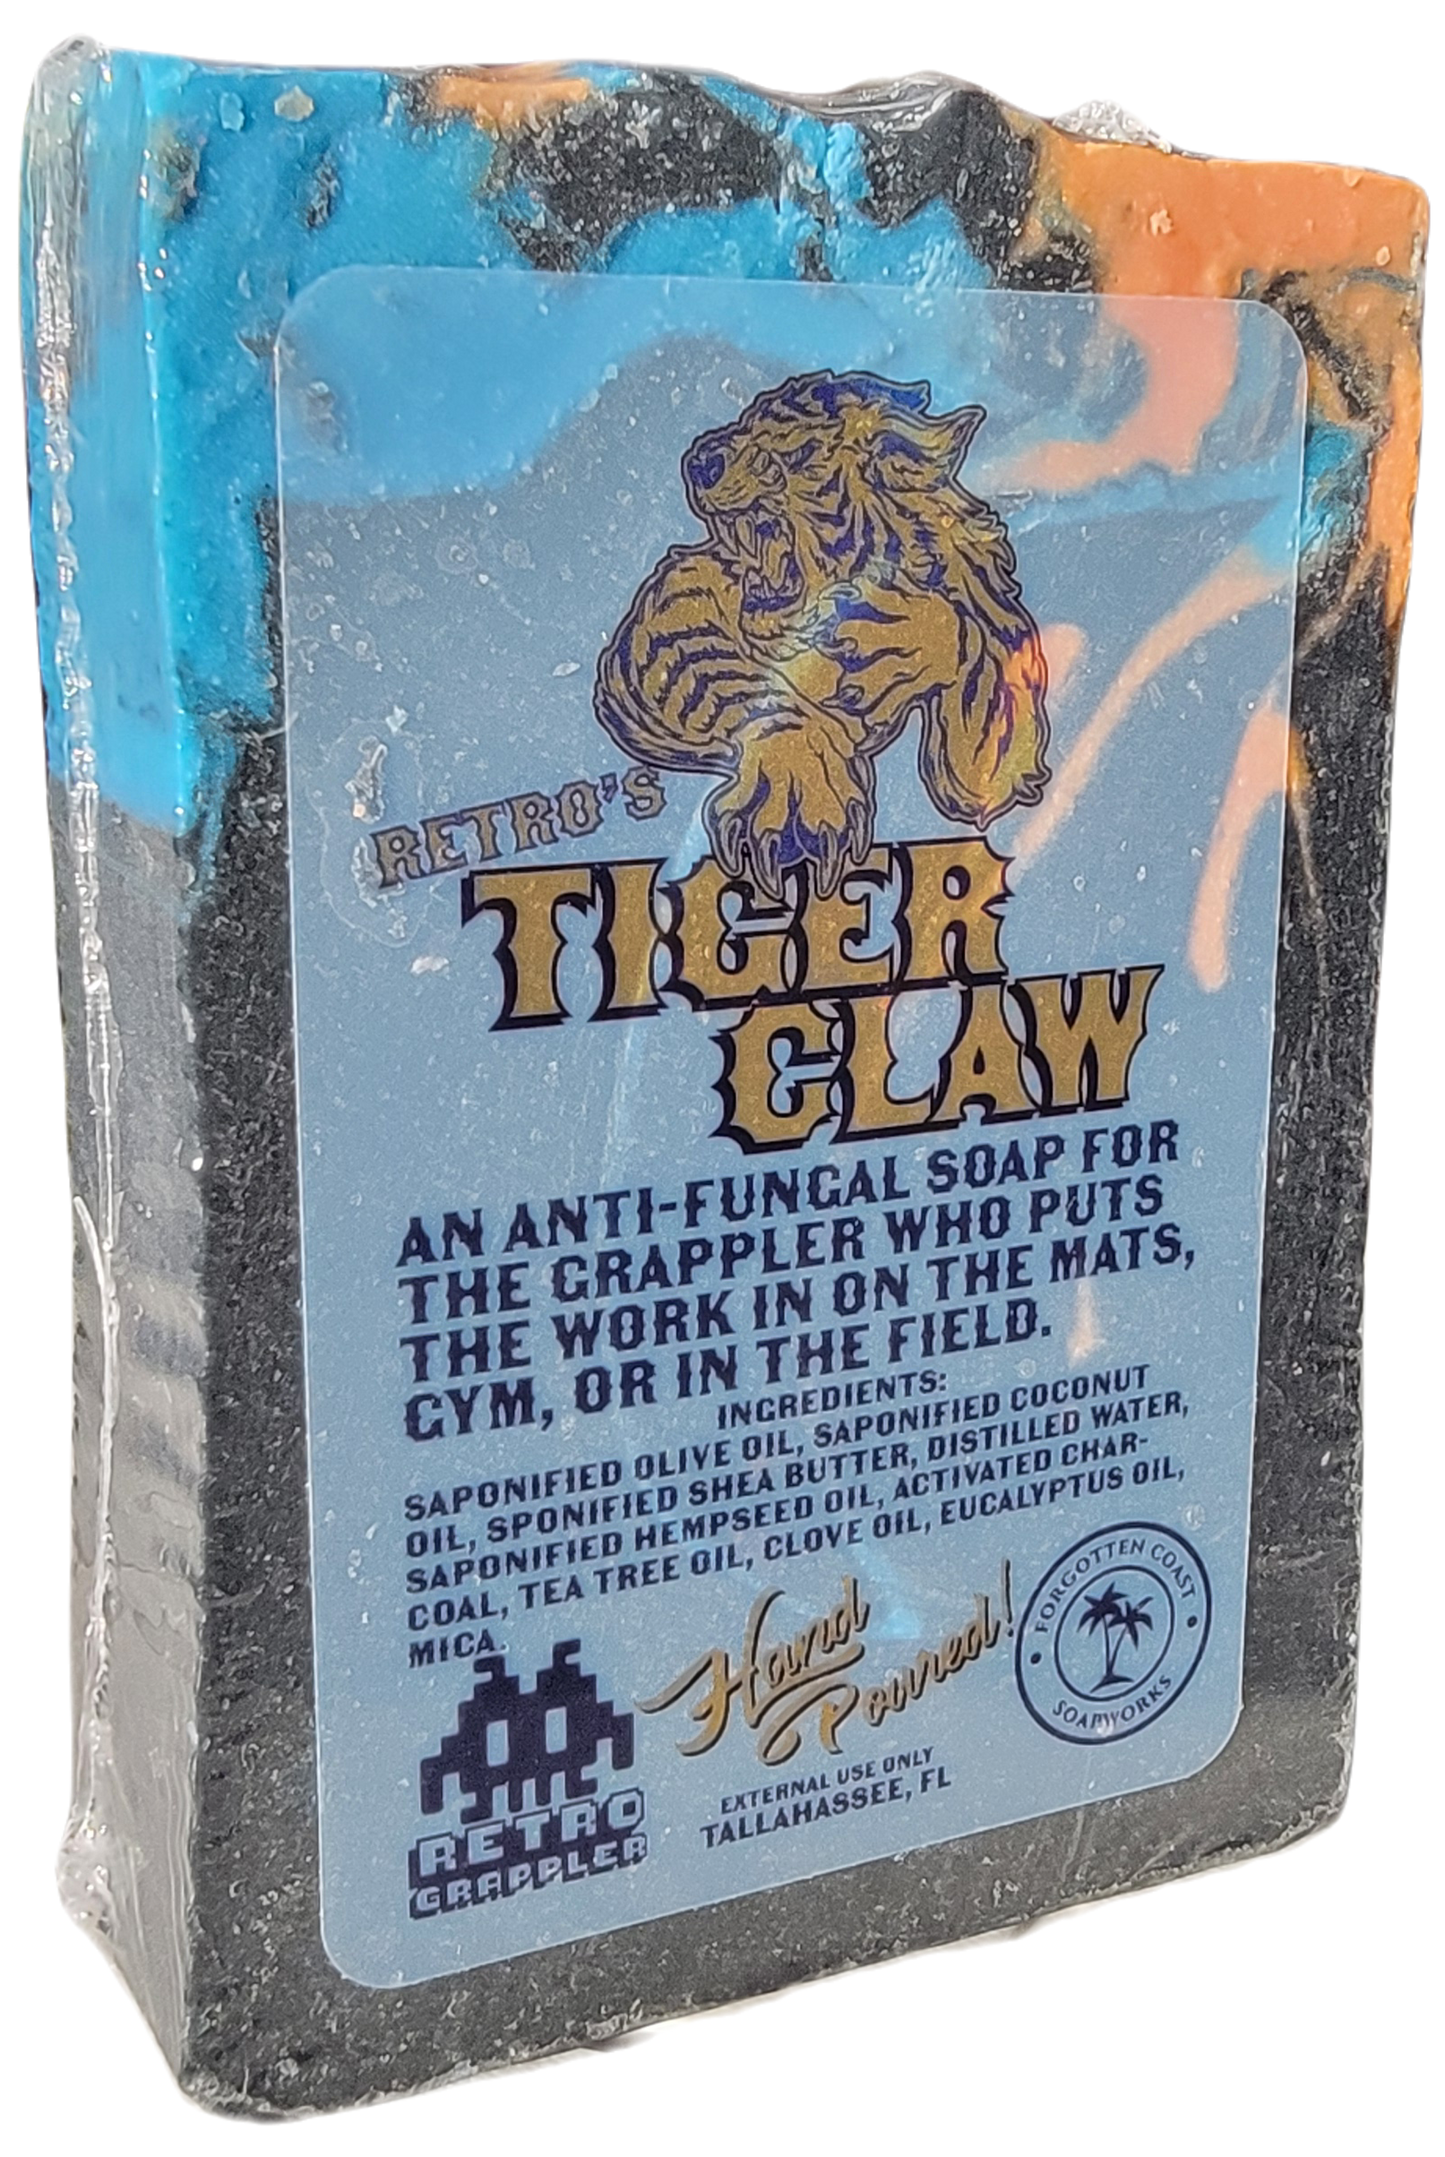 Retro's Tiger Claw Hand Poured Soap